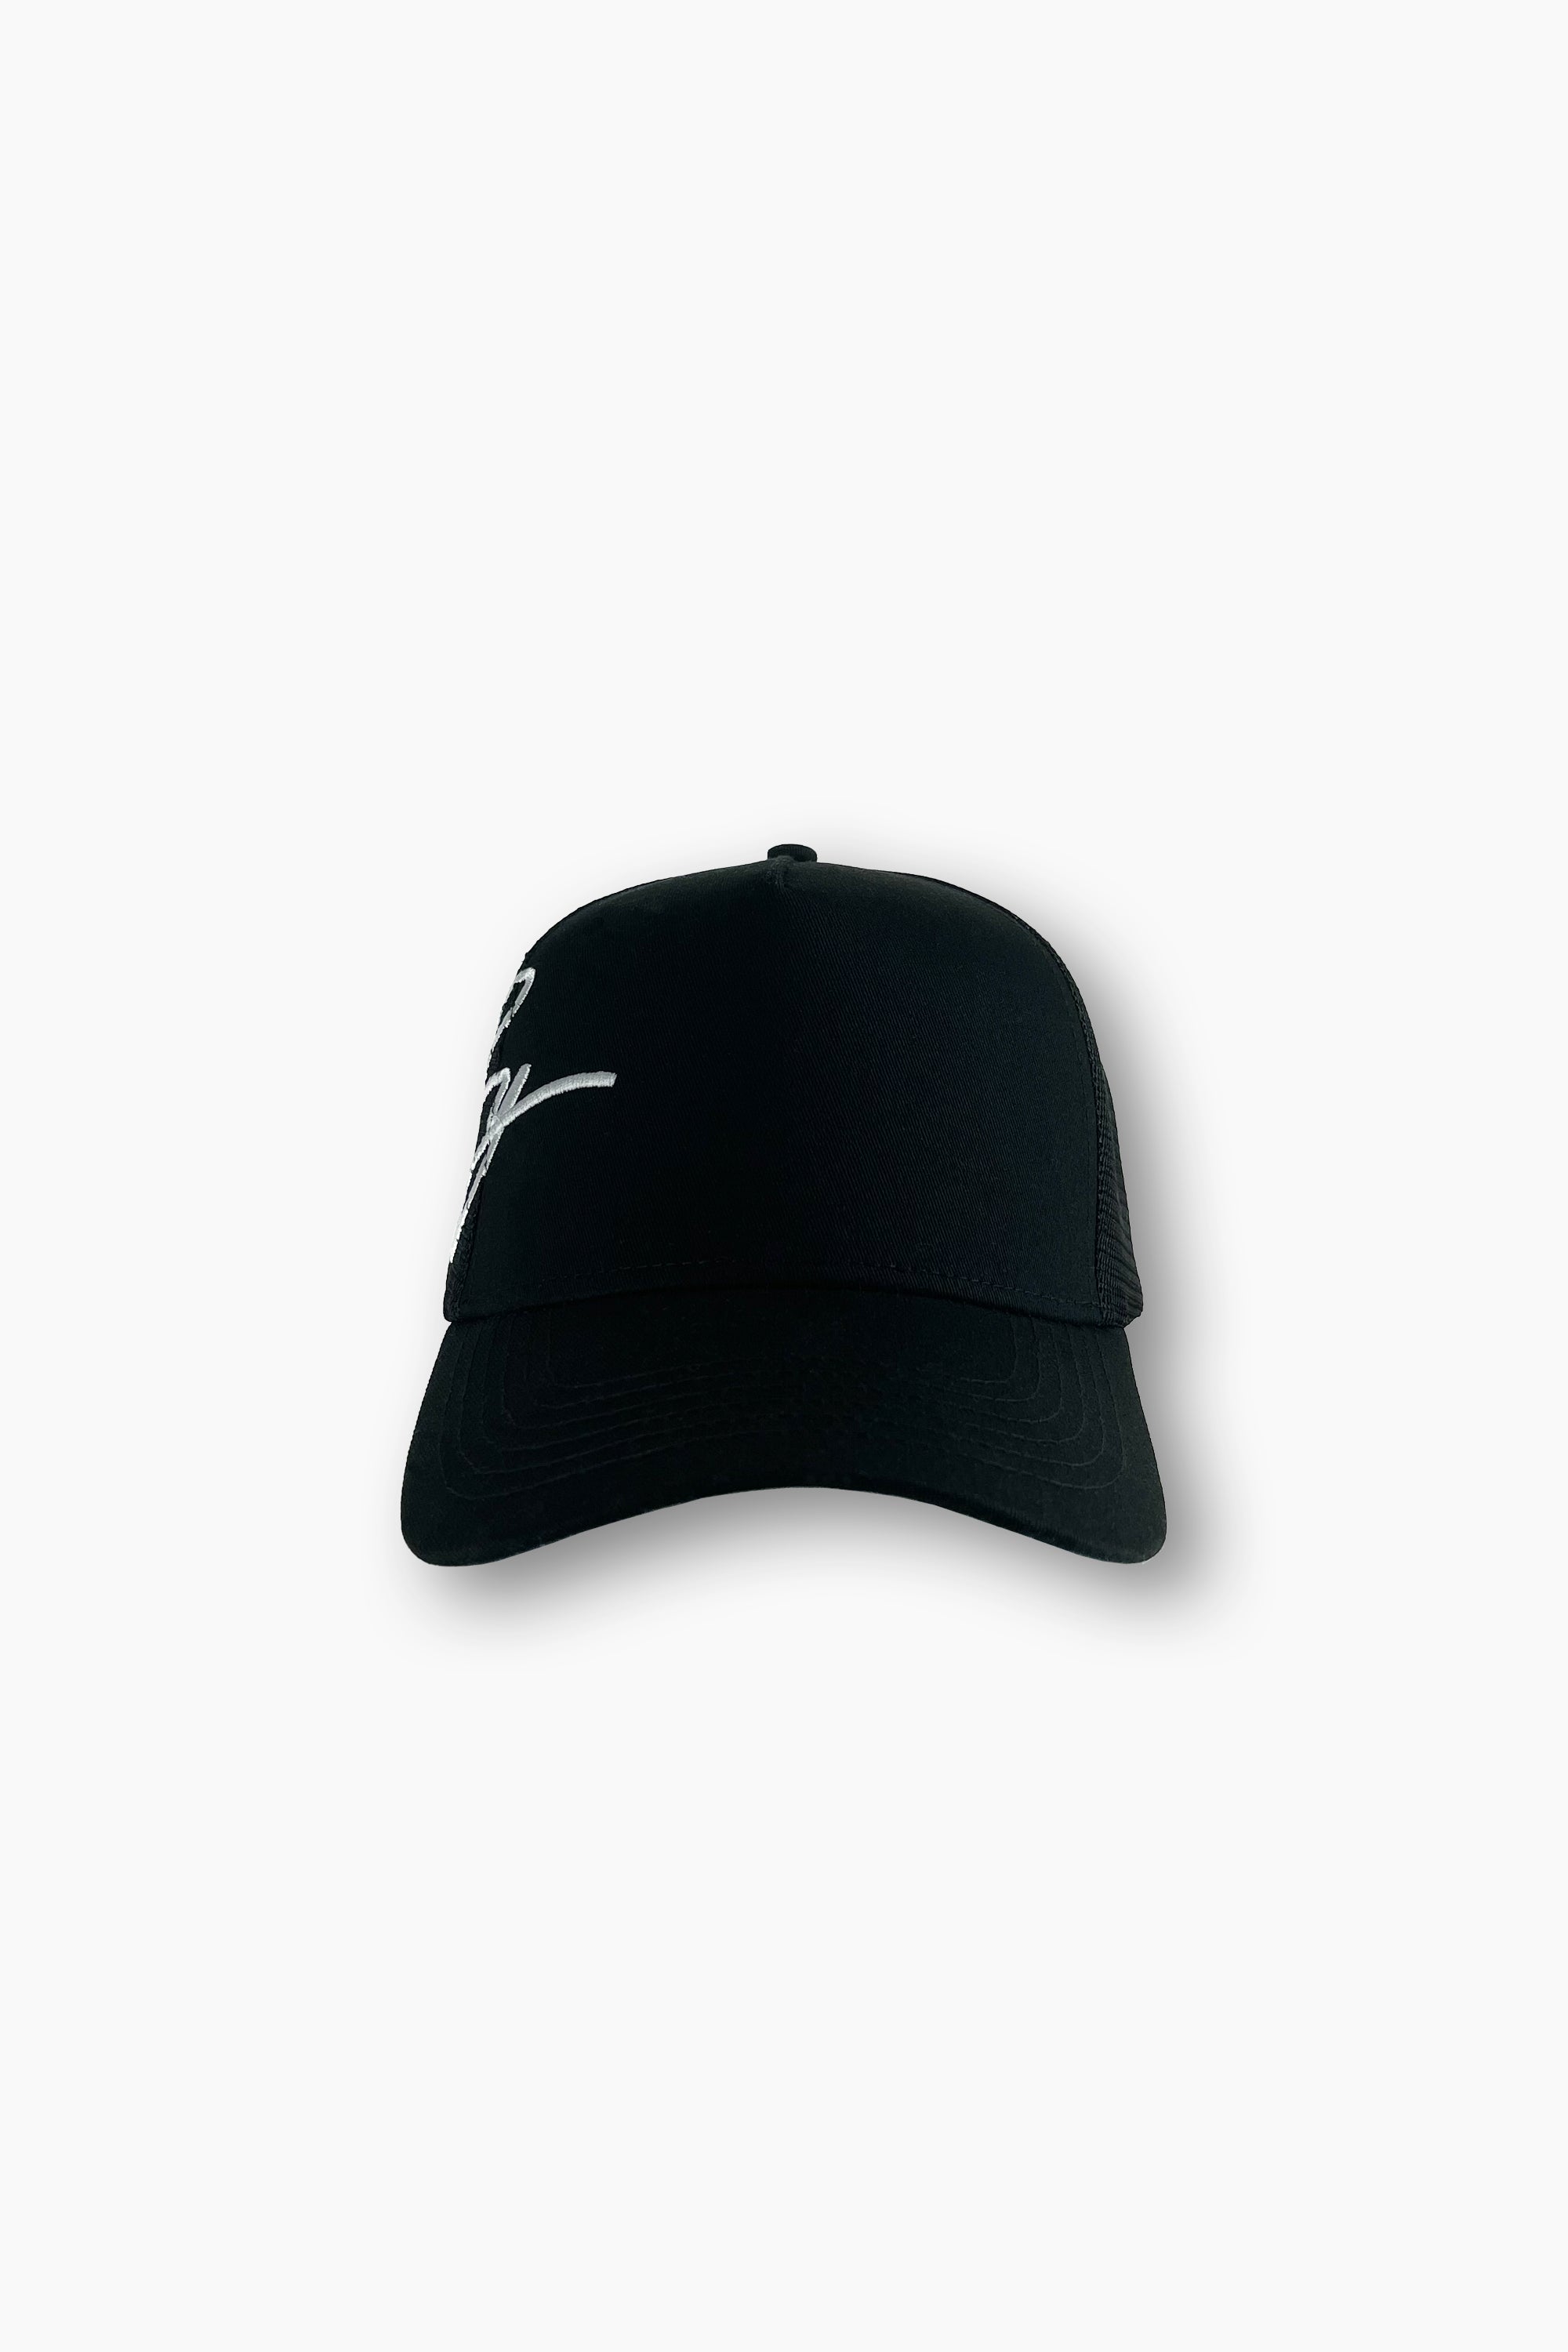 black designer trucker hat front view